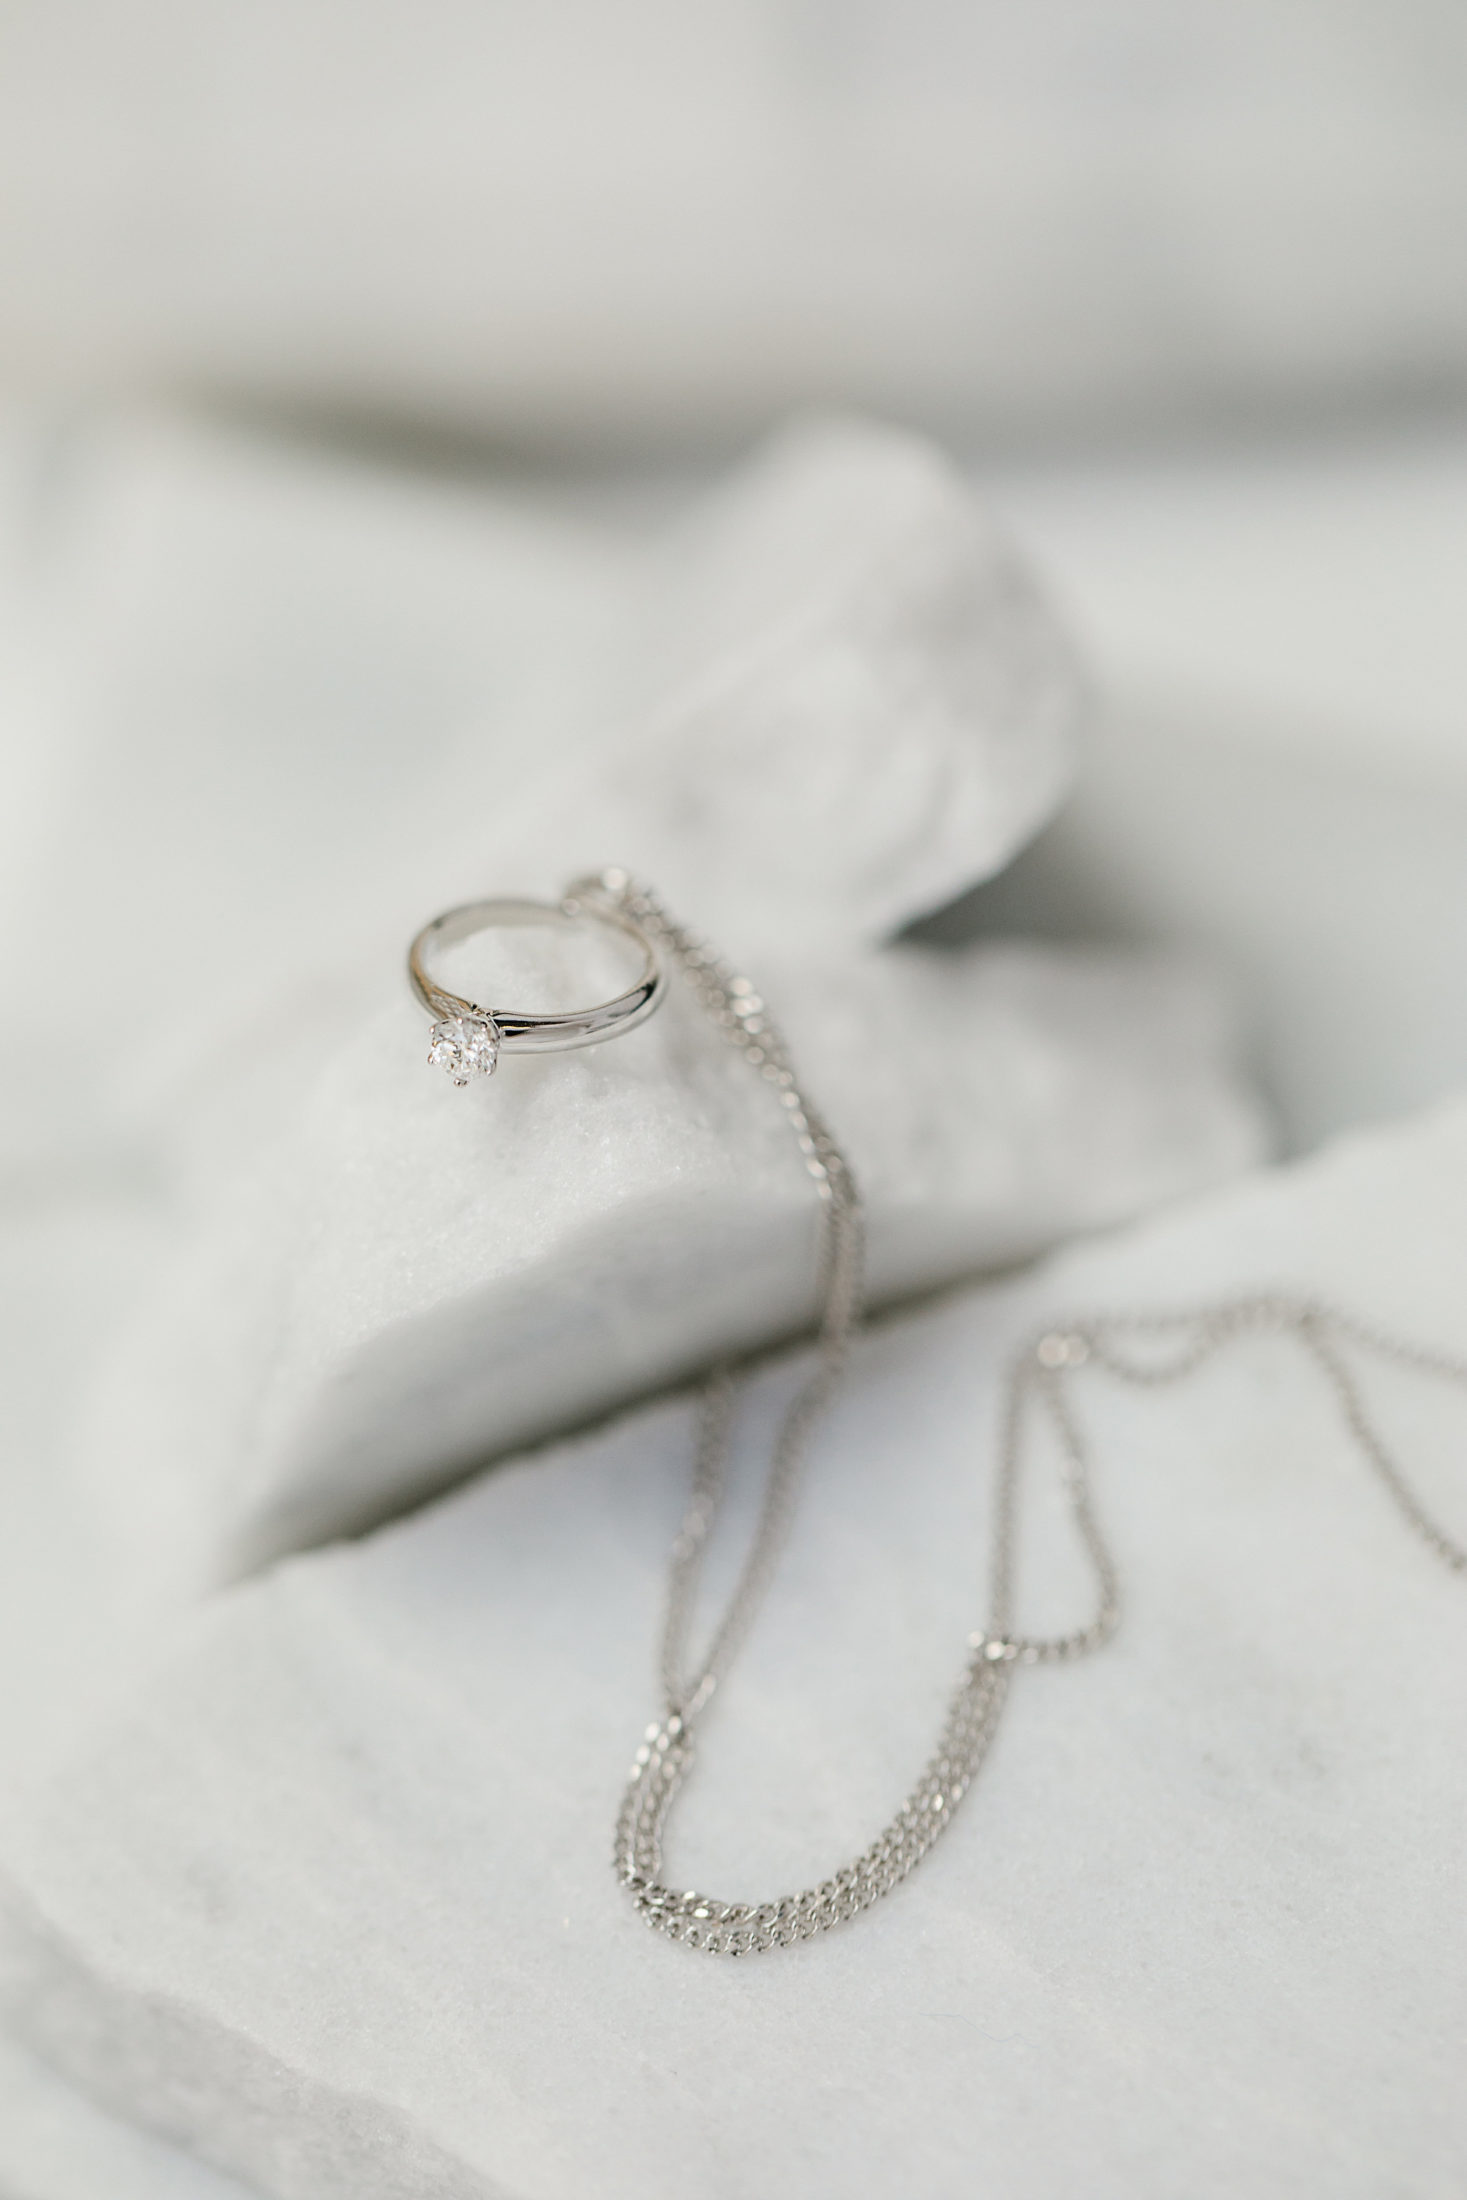 Taylor & Hart White Gold Diamond Engagement Ring